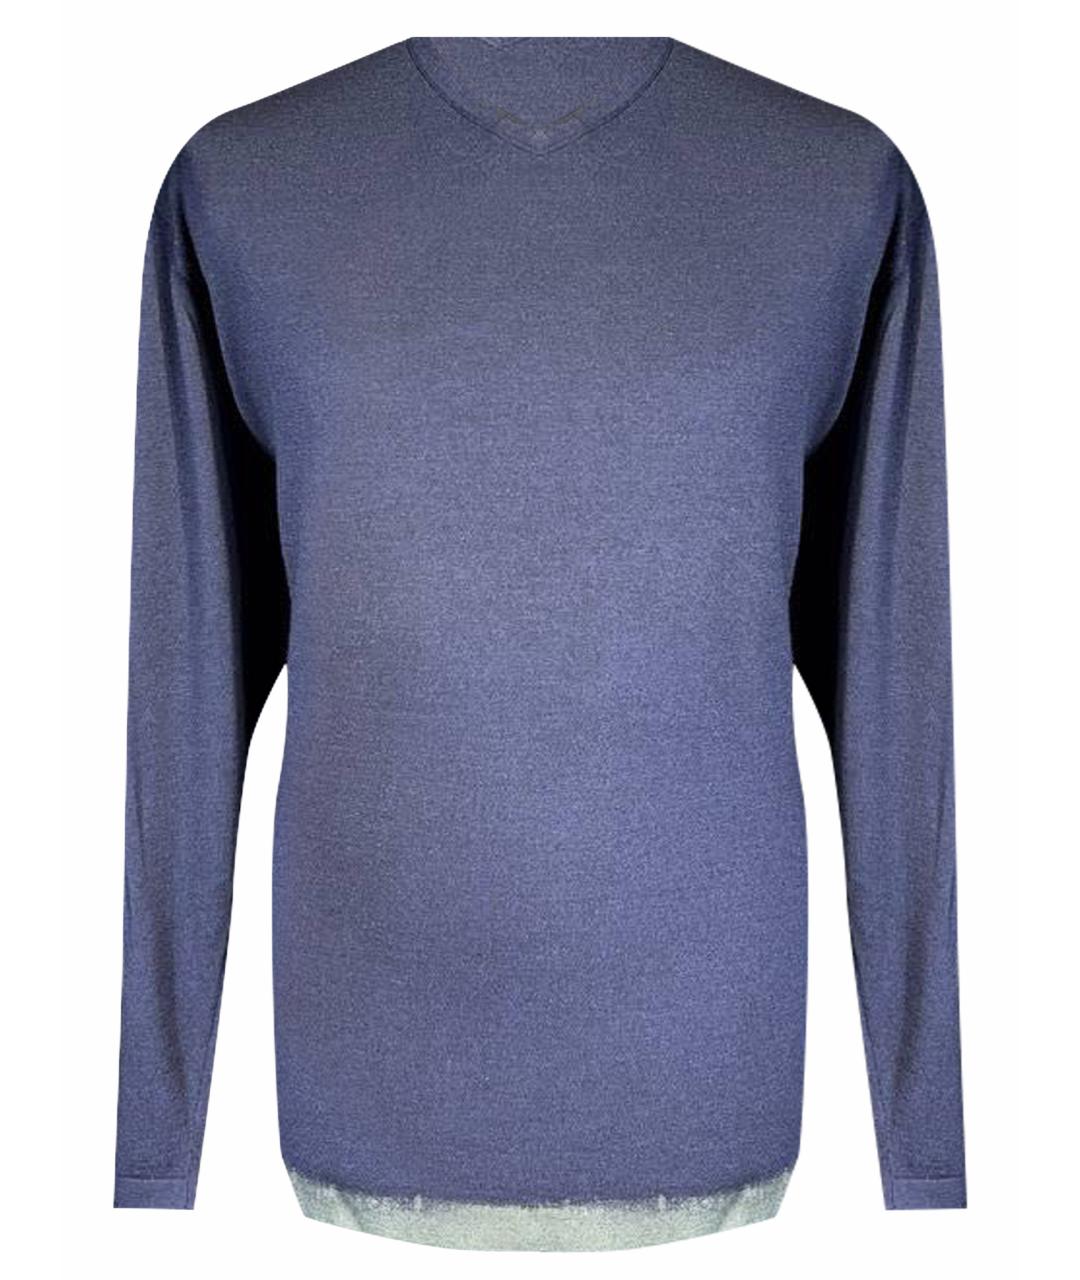 BERTOLO LUXURY MENSWEAR Темно-синий джемпер / свитер, фото 1